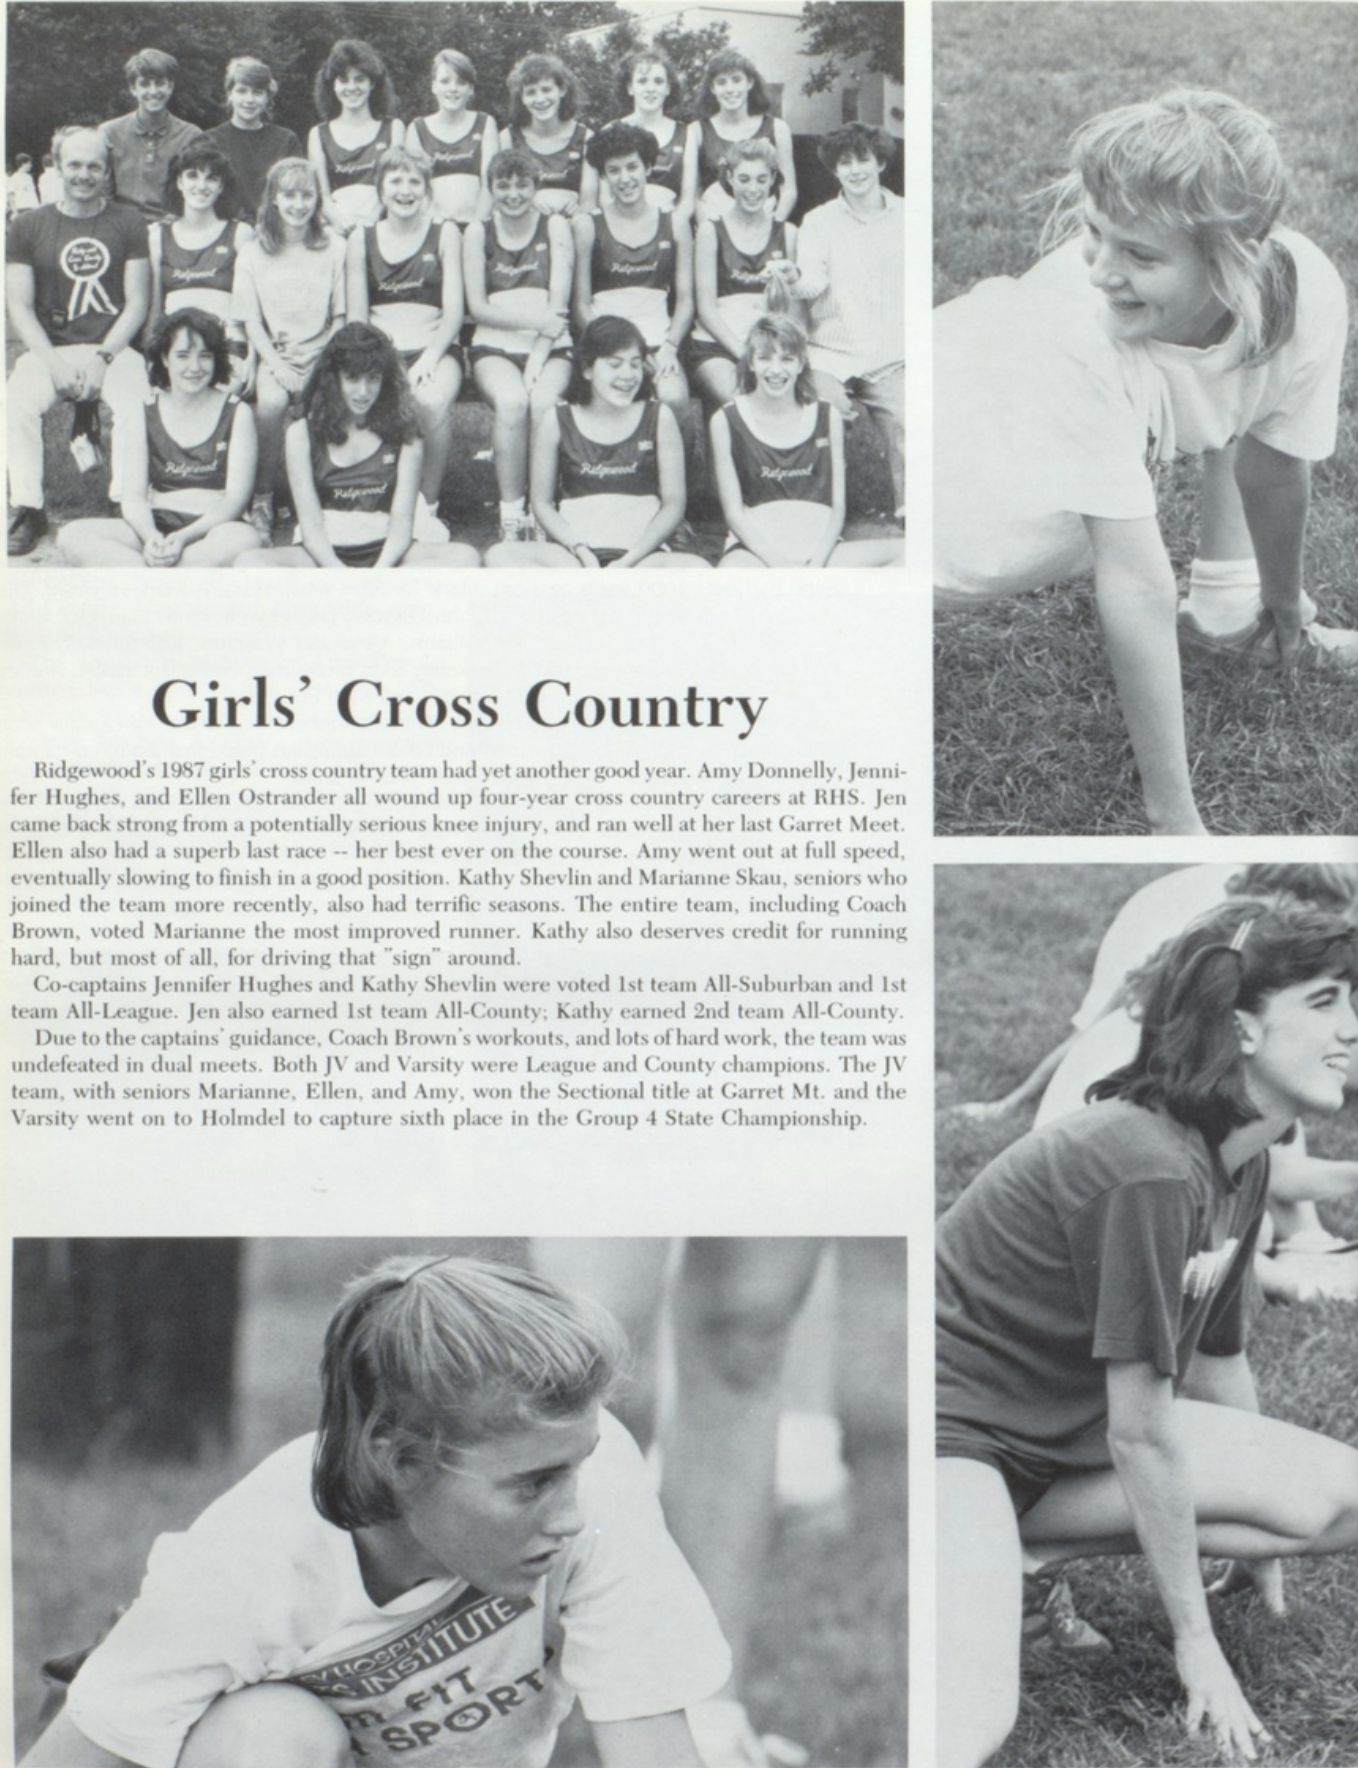 1987 Girls’ Cross Country Team